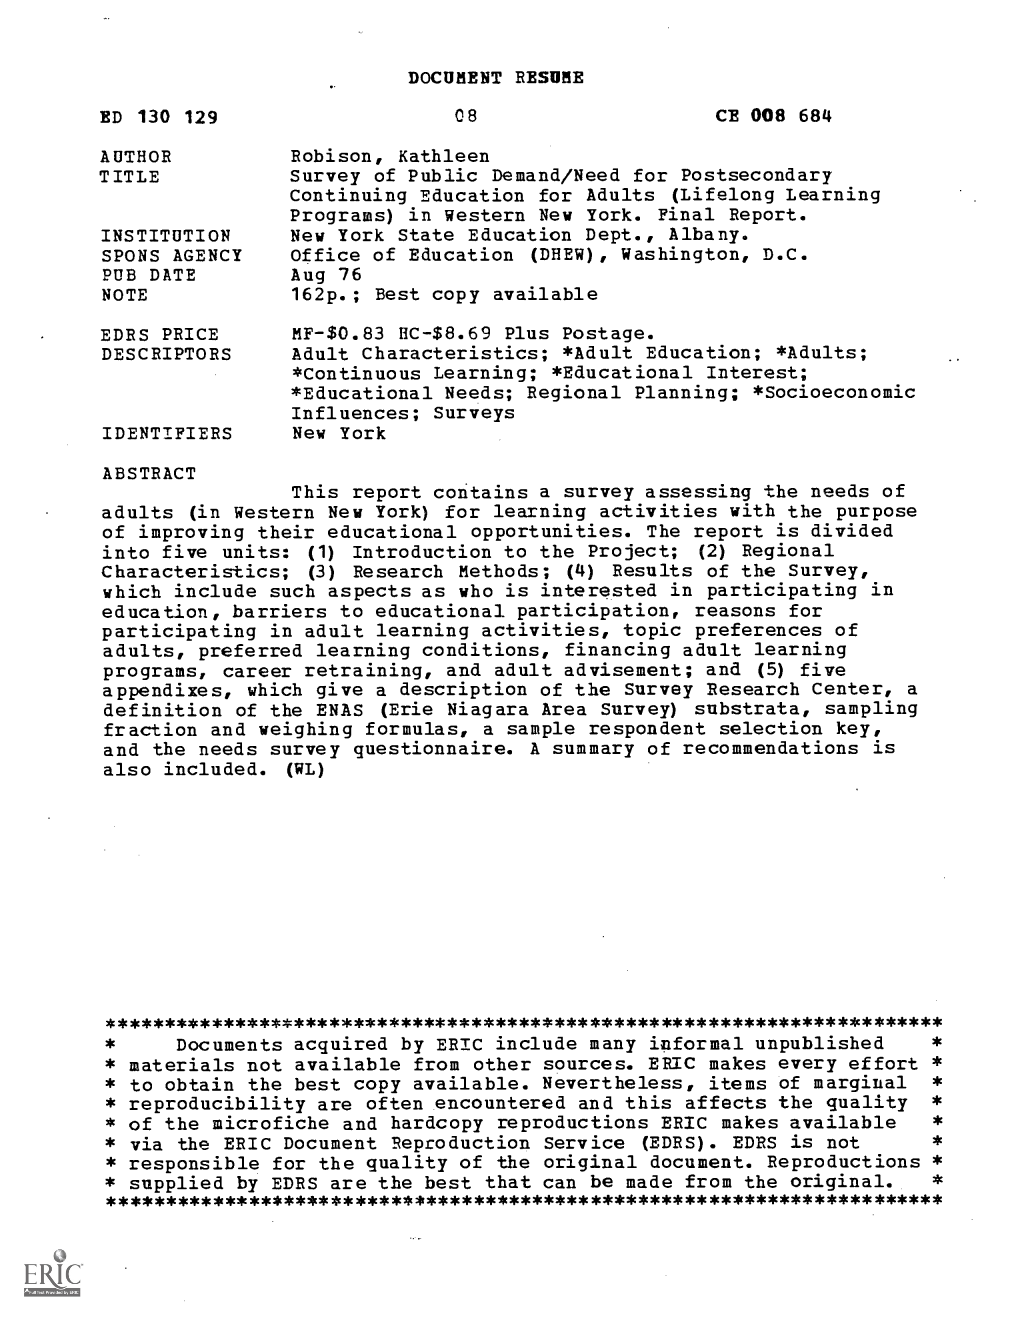 Document Resume Ed 130